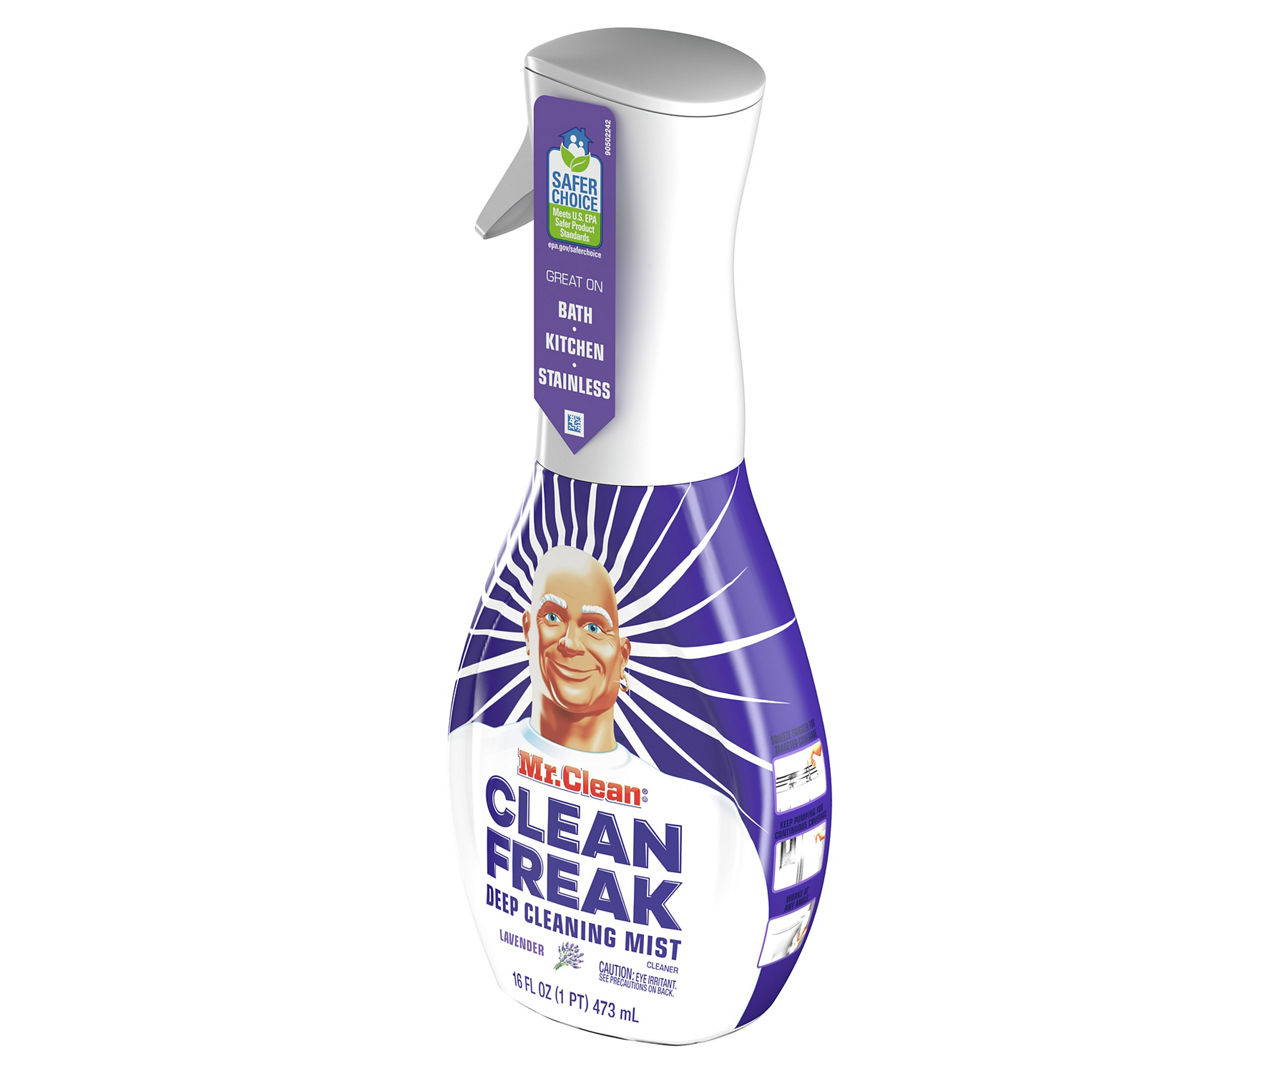 Mr. Clean Clean Freak - SET of (2) 16 oz LEMON ZEST REFILLS Multi